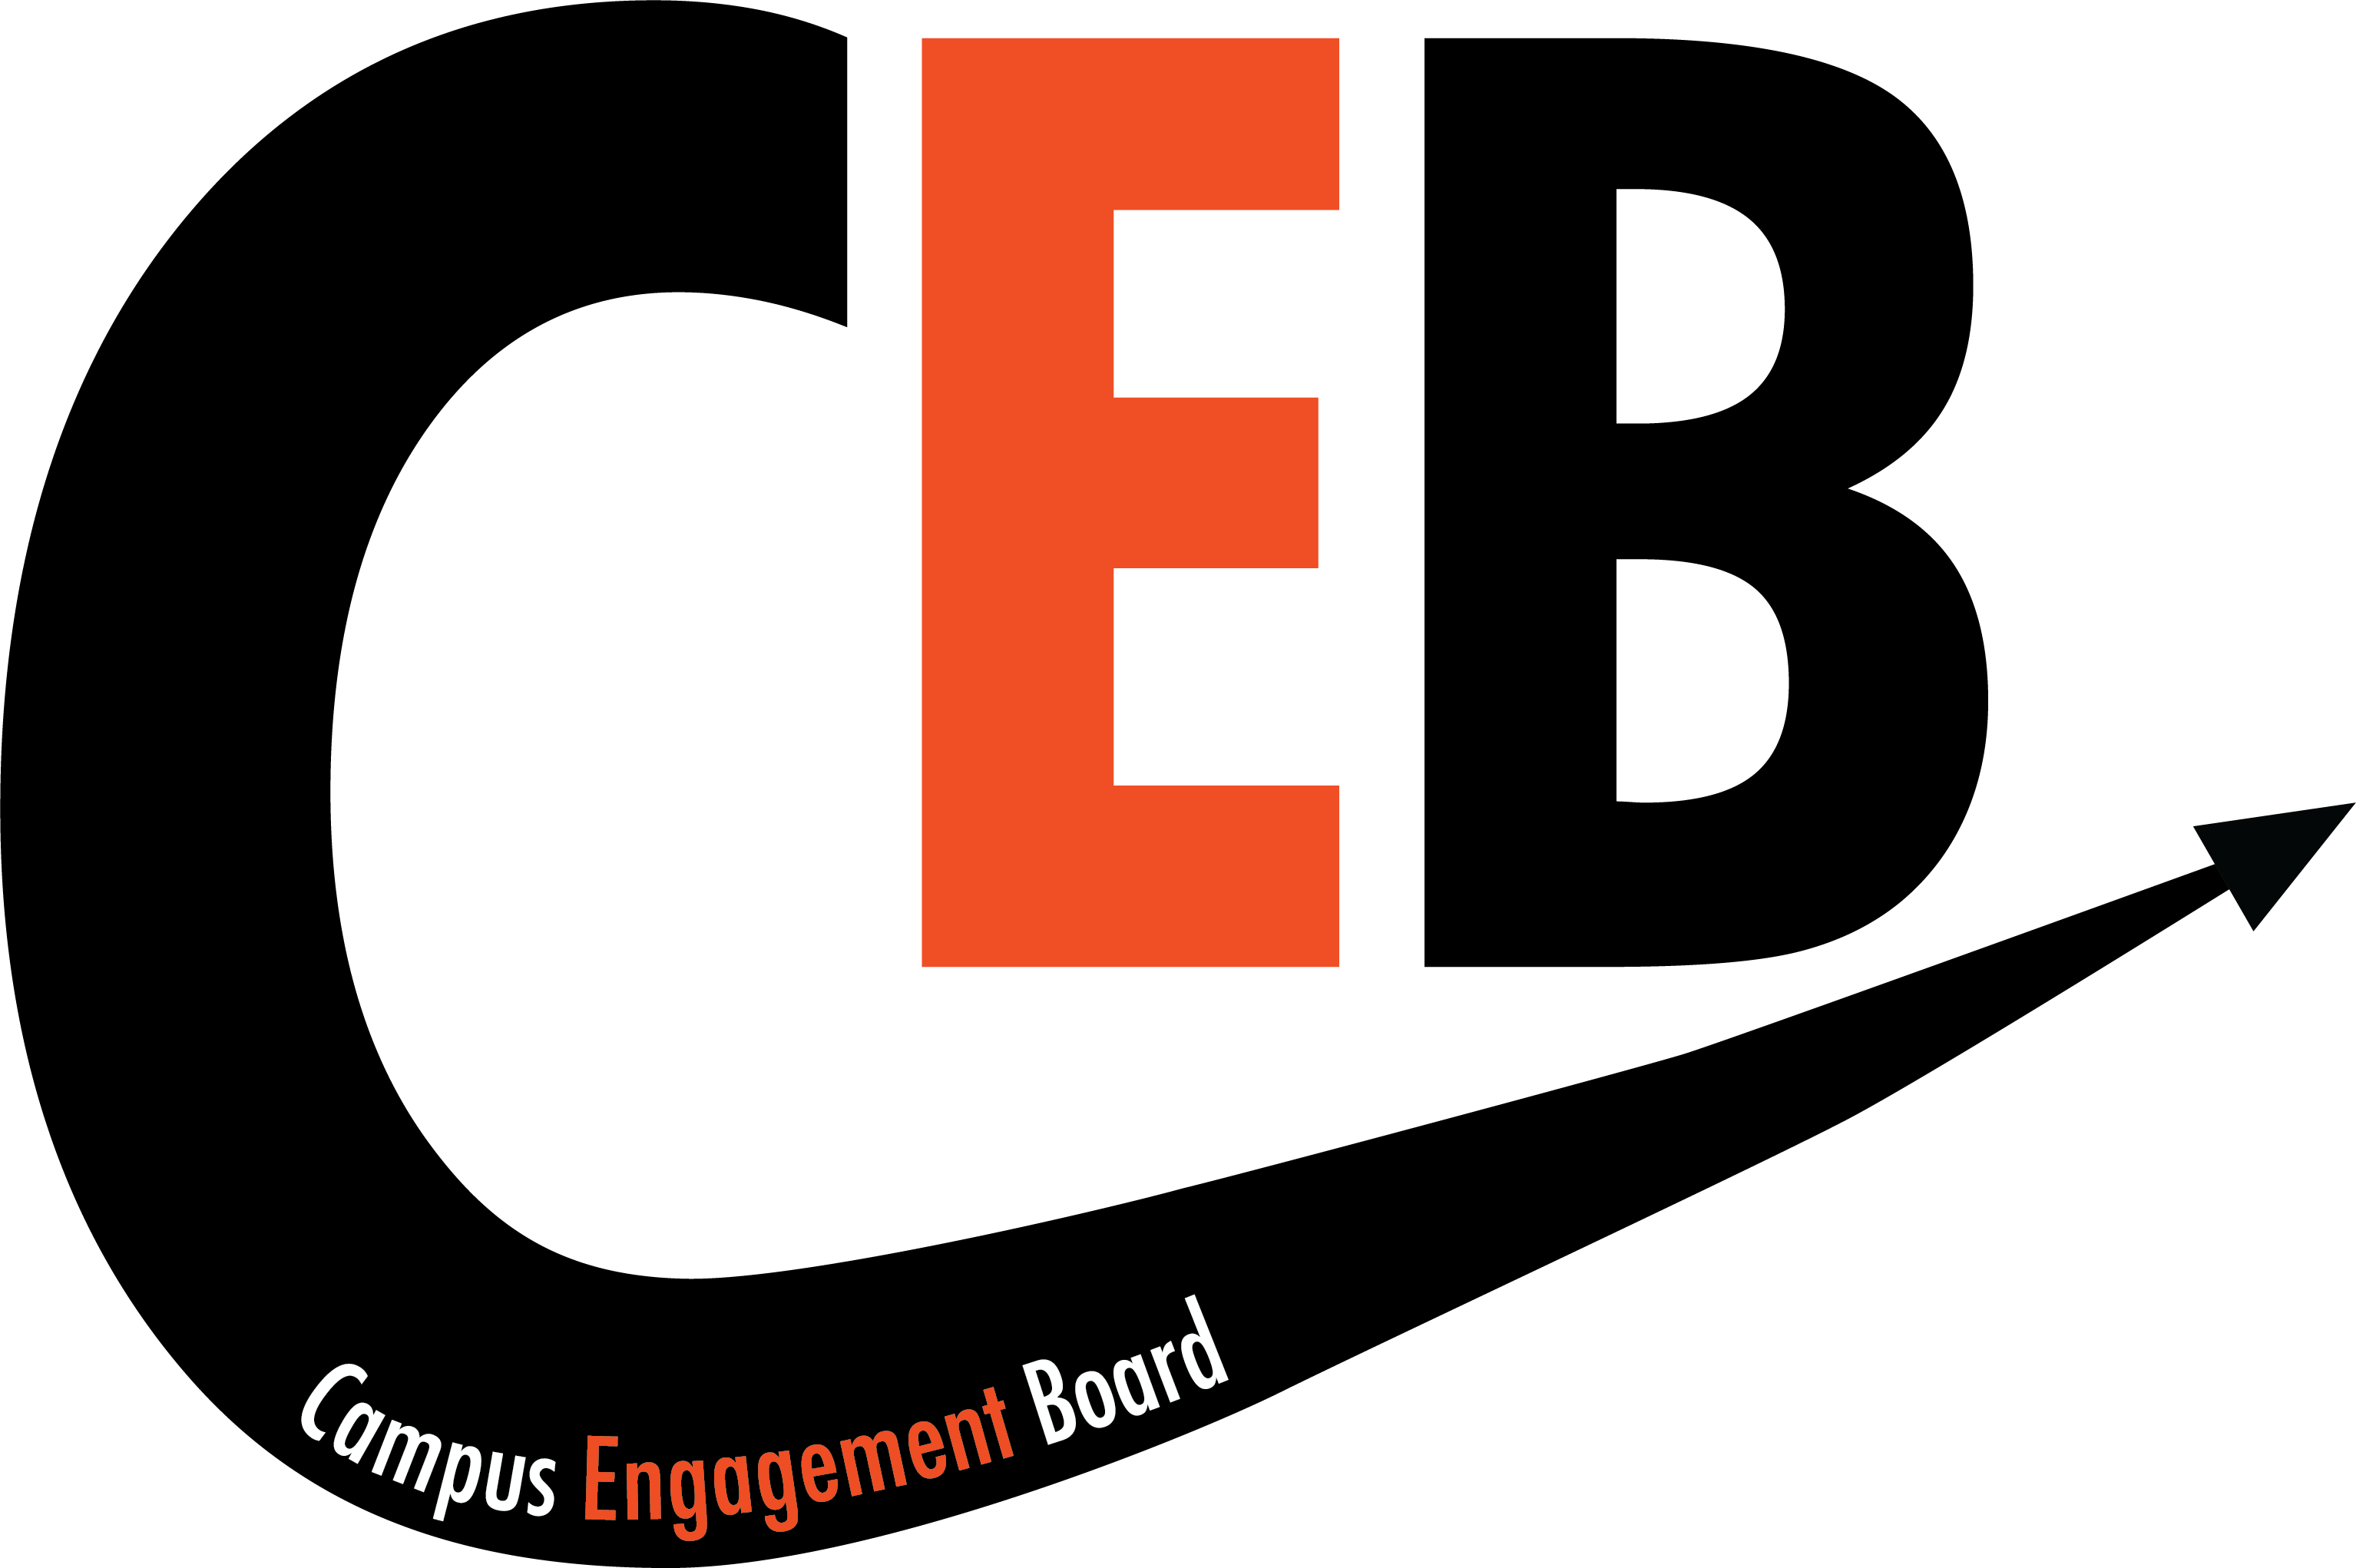 Campus Engagement Board Logo